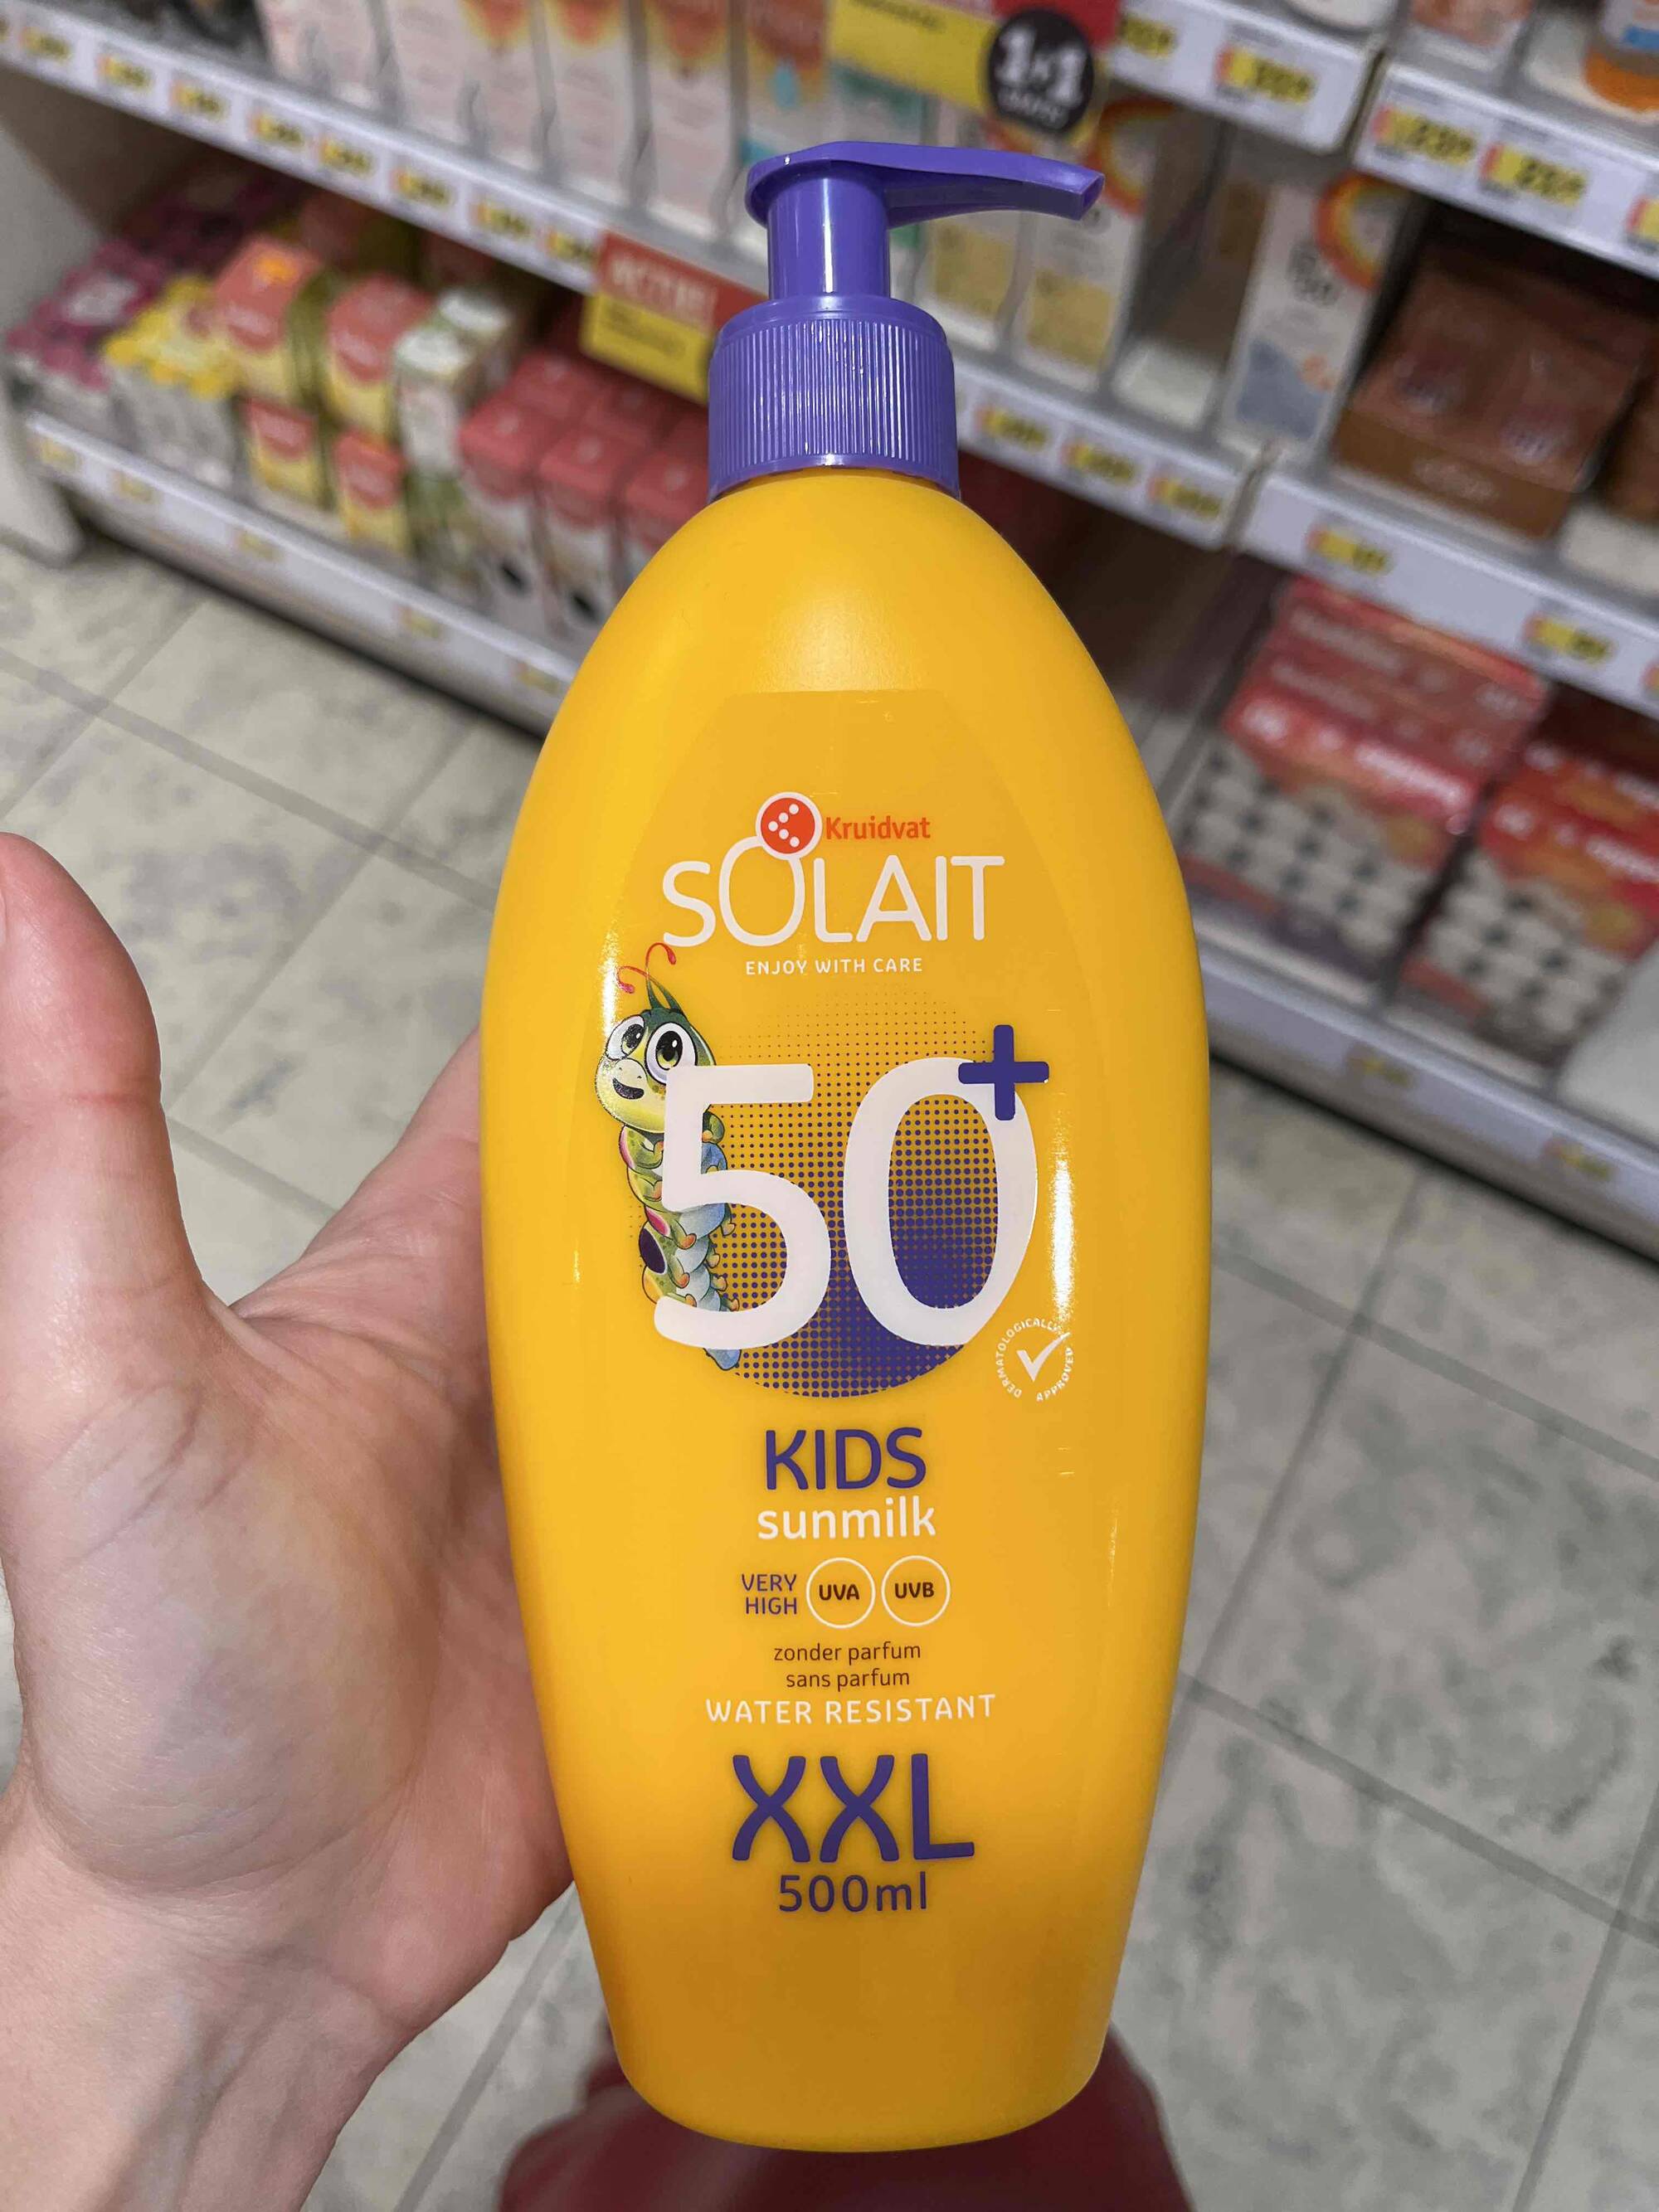 KRUIDVAT - Solait - Kids sunmilk water resistant XXL